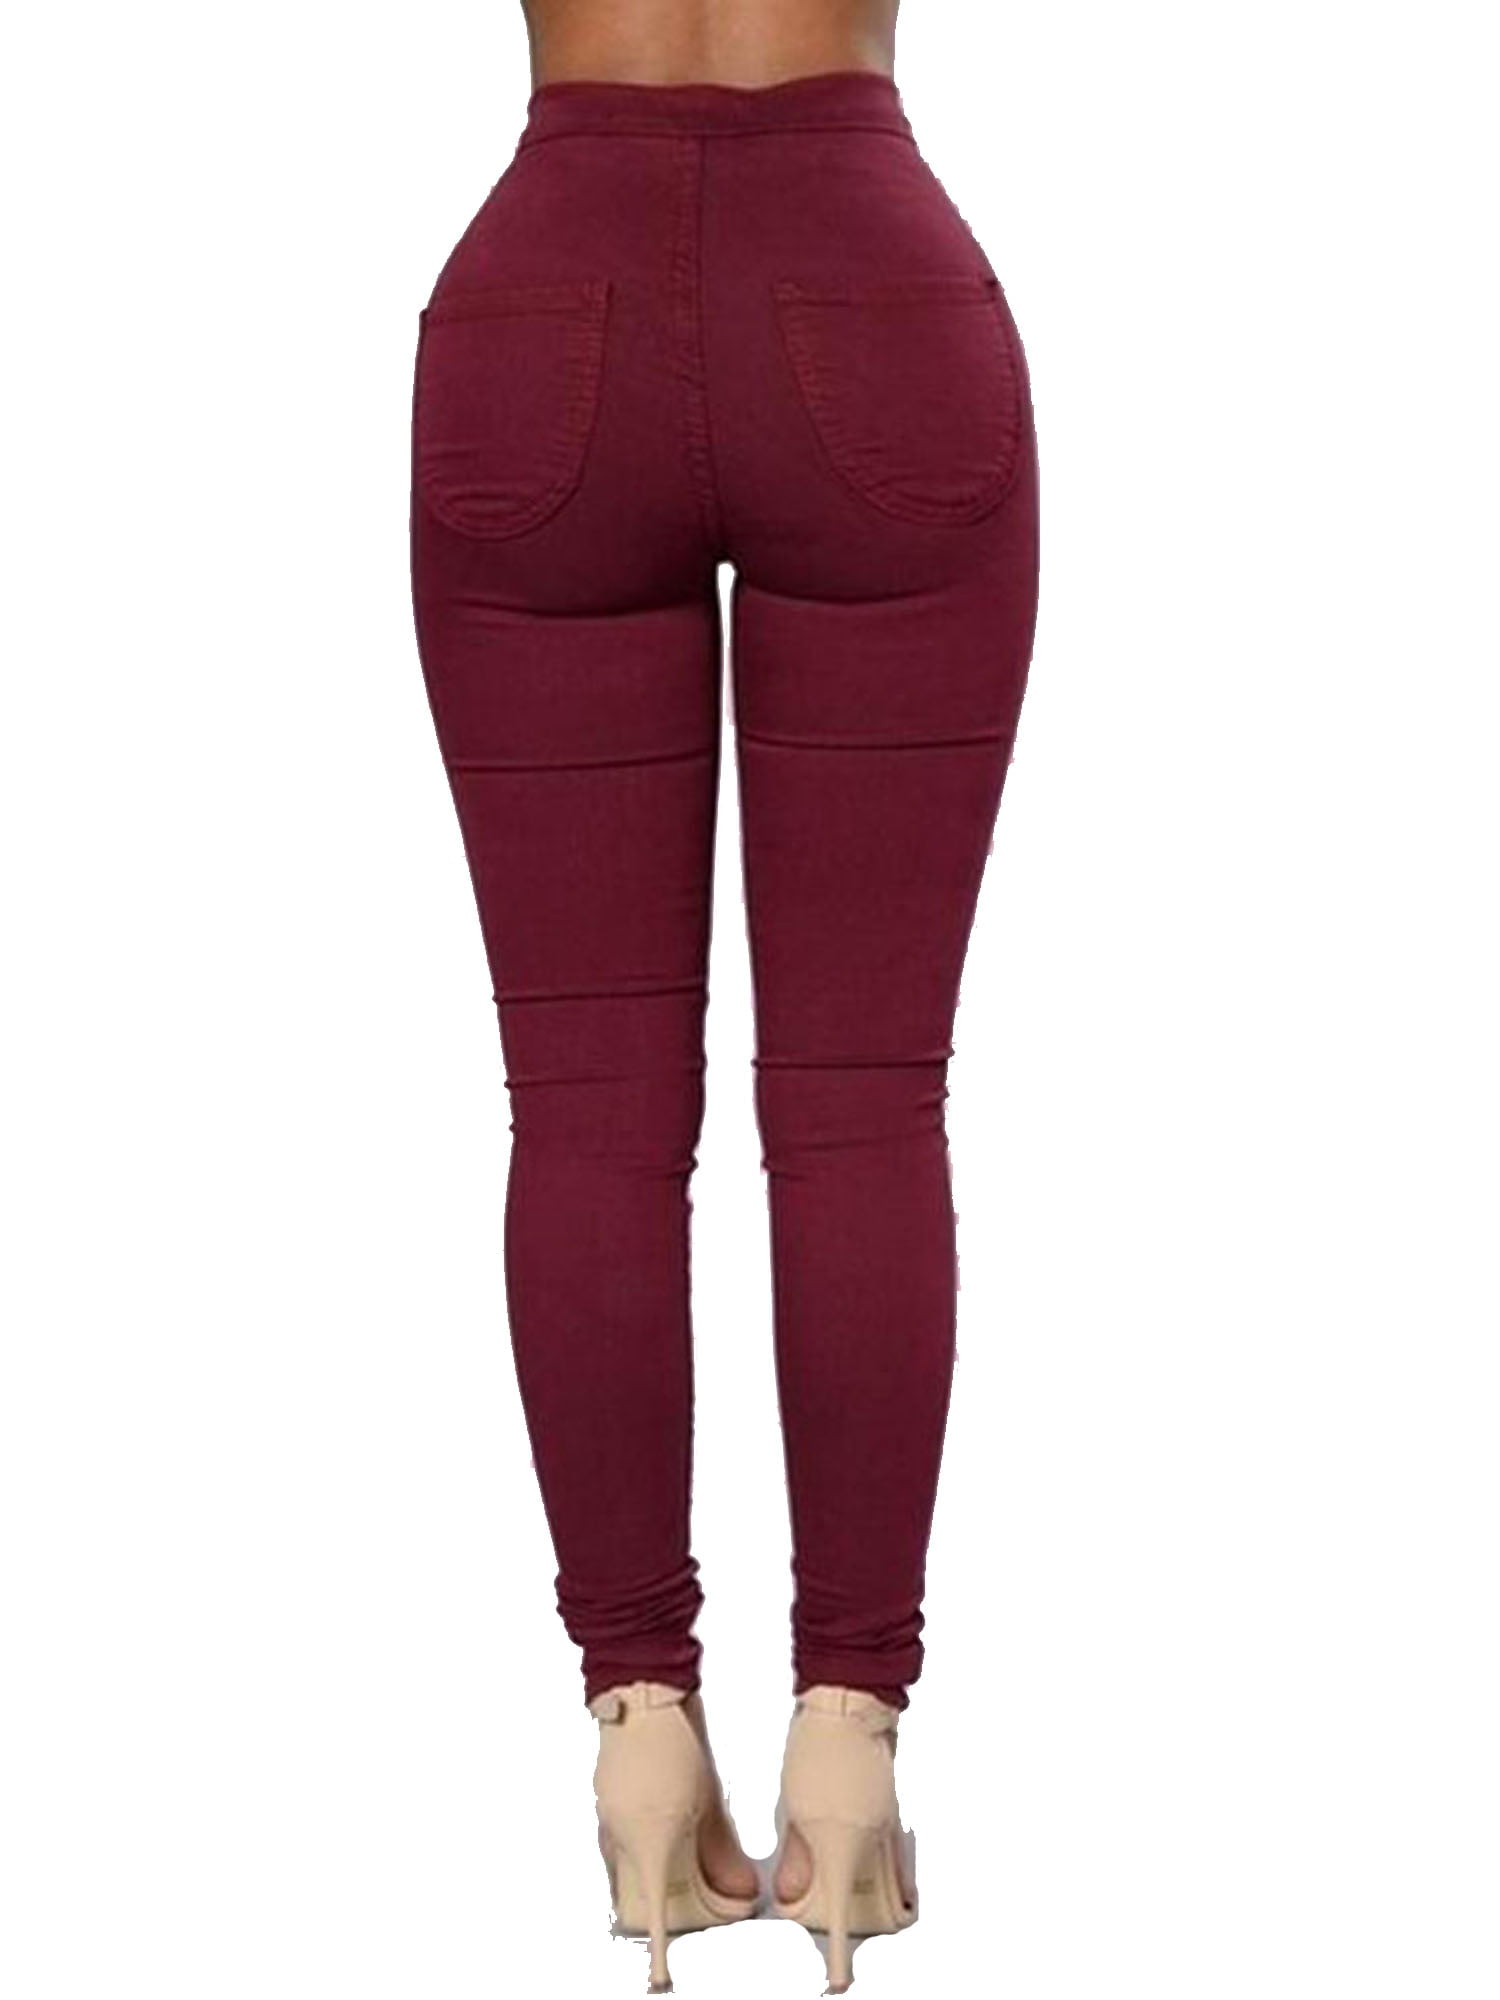 YFancy Women's Casual High Waist Tummy Control Zipper Design Stretch Skinny Pants Leggings Trousers 